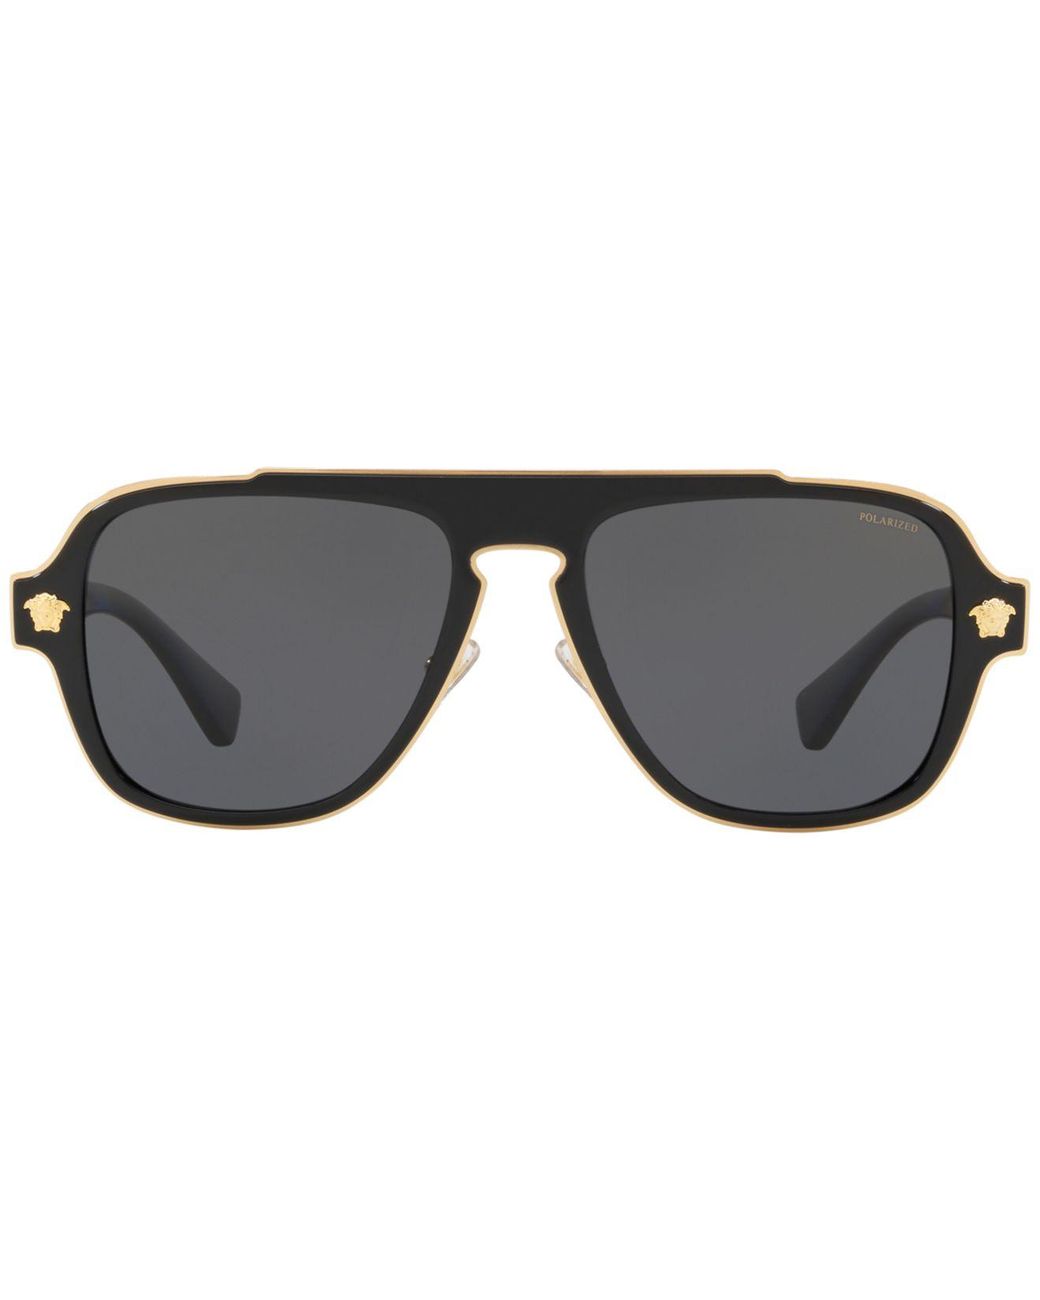 Versace Sunglasses Ve2199 in Dark Grey (Gray) for Men - Save 3 